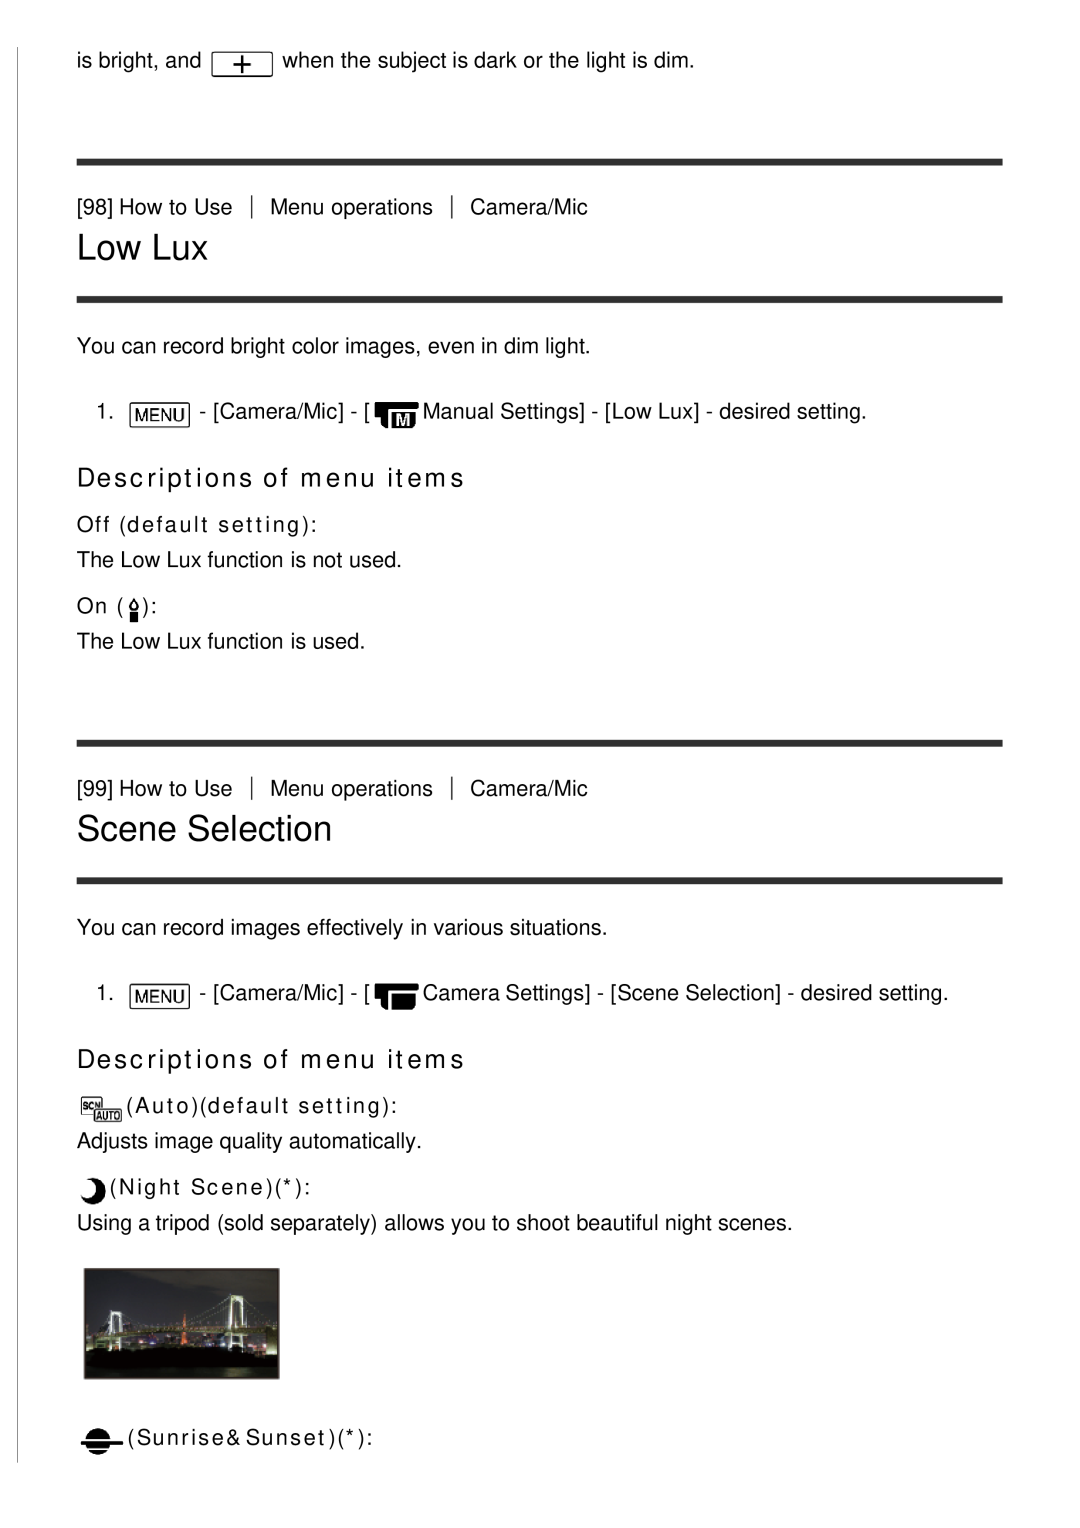 Sony HDR-CX900 Low Lux, Scene Selection, Autodefault setting, Night Scene, Sunrise&Sunset, Descriptions of menu items 